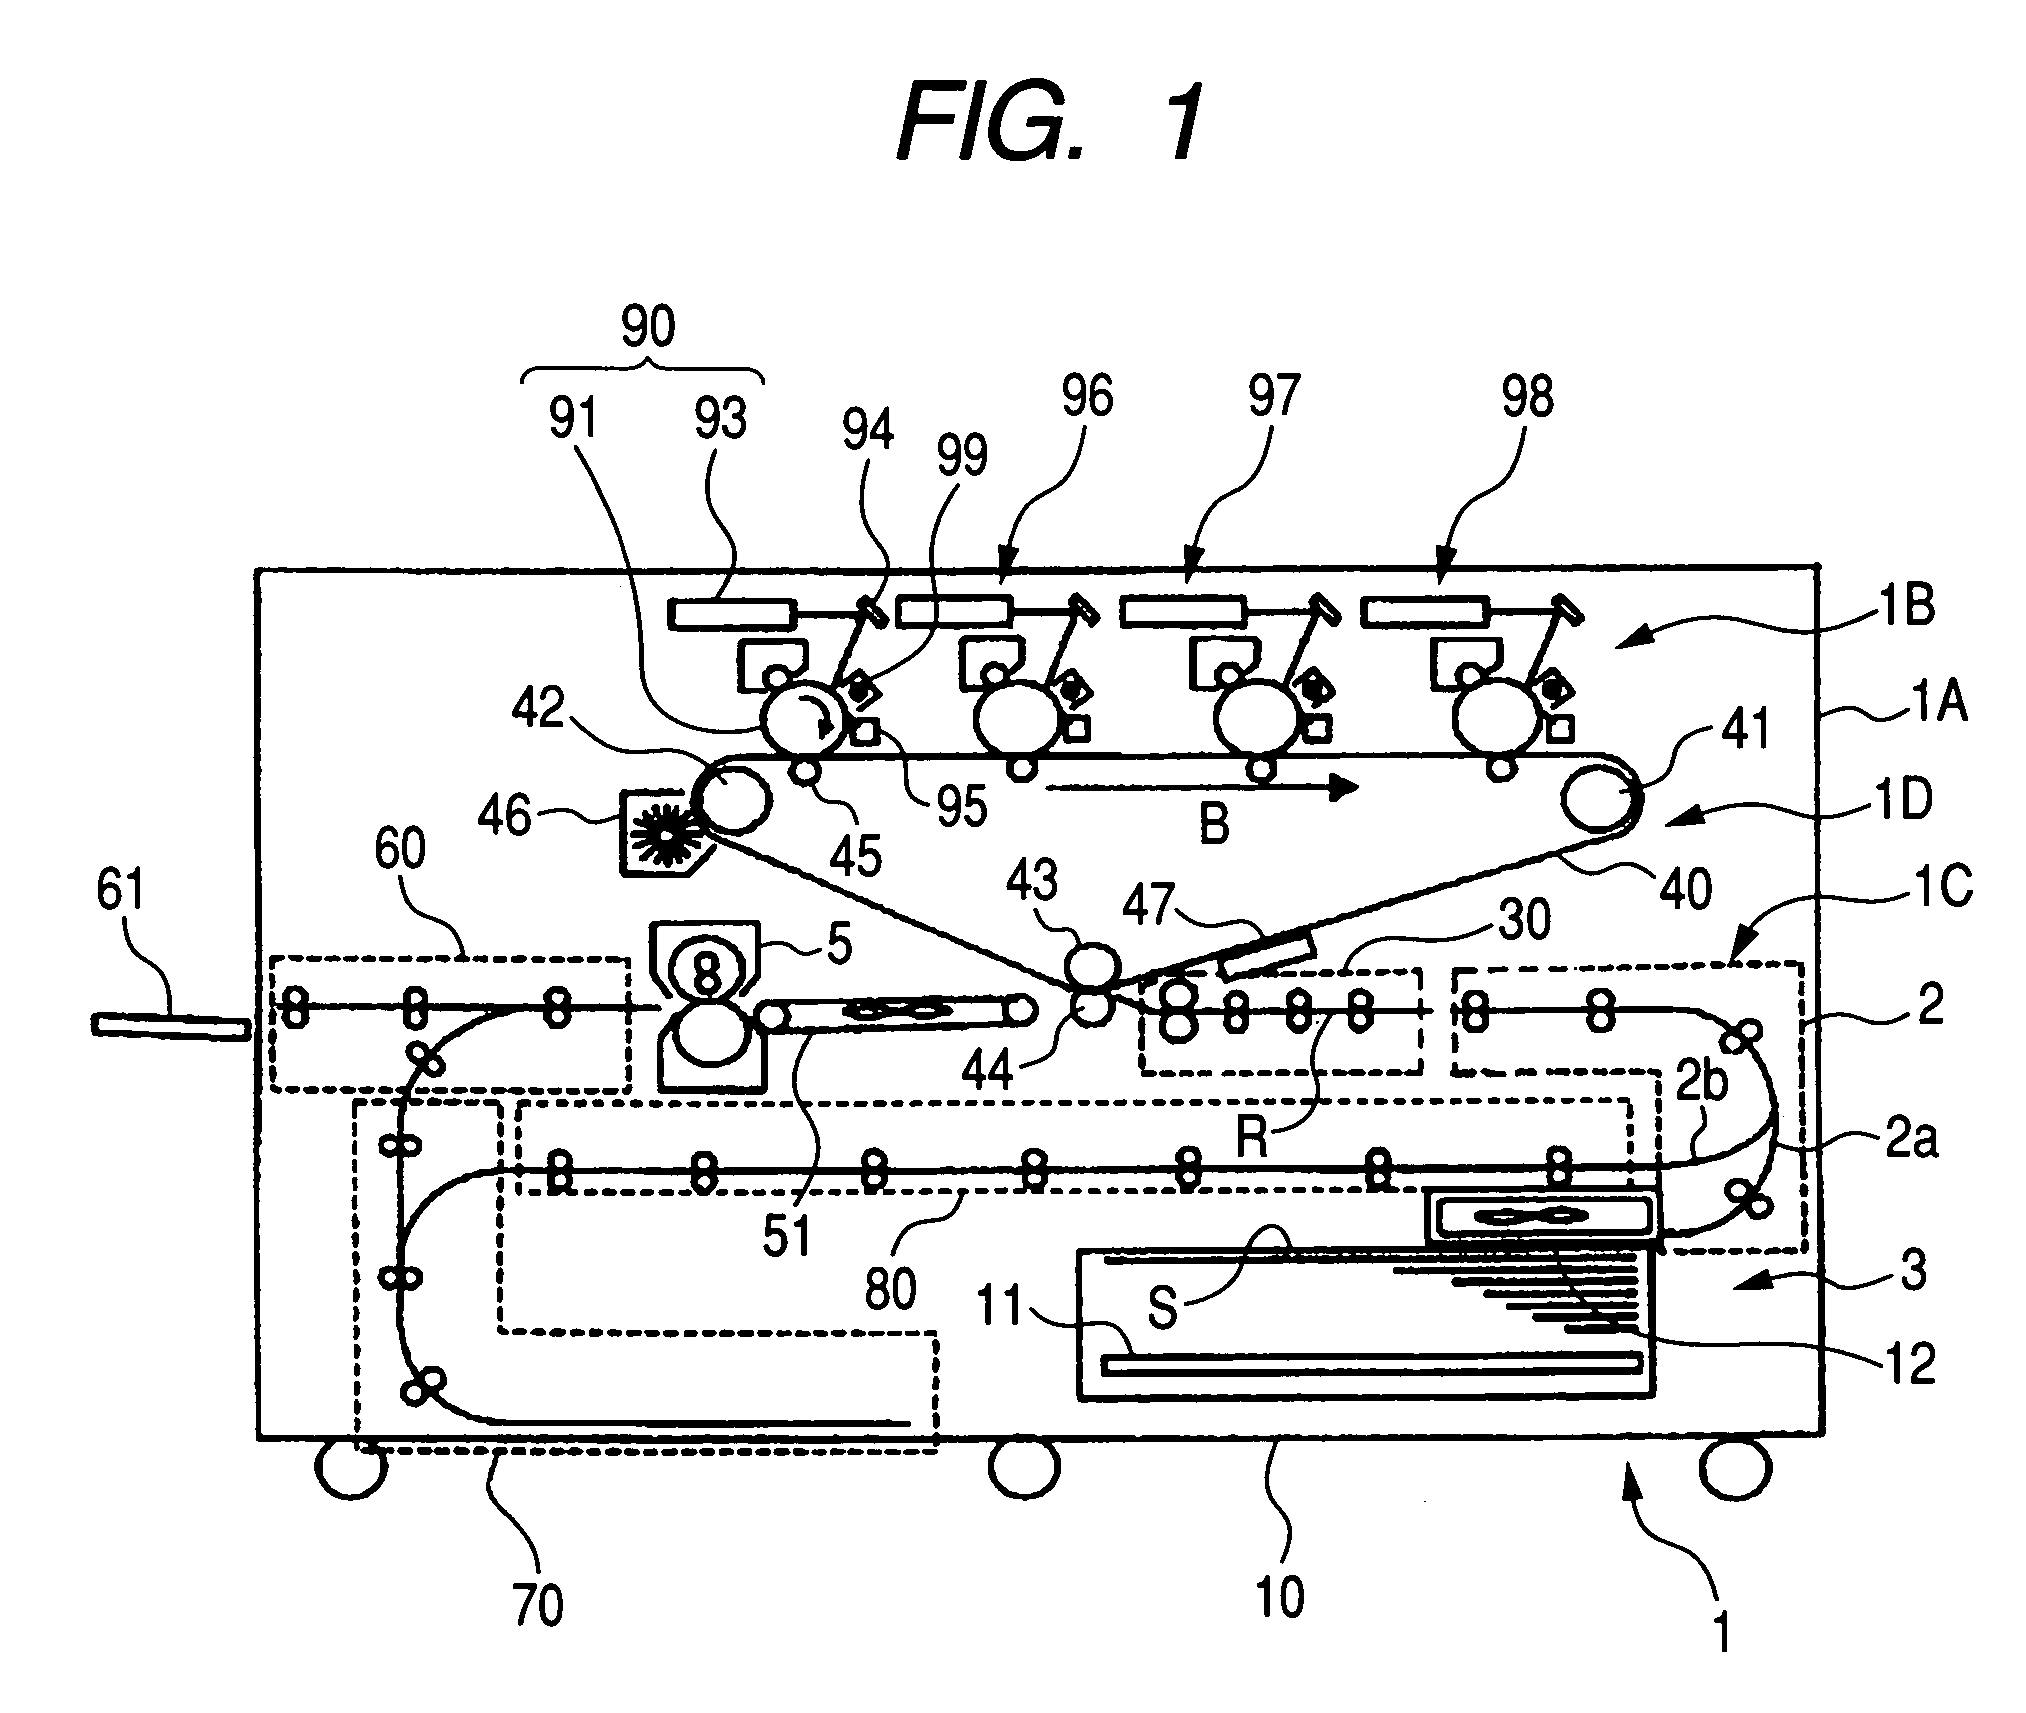 Sheet transport apparatus, image forming apparatus, and image reading apparatus